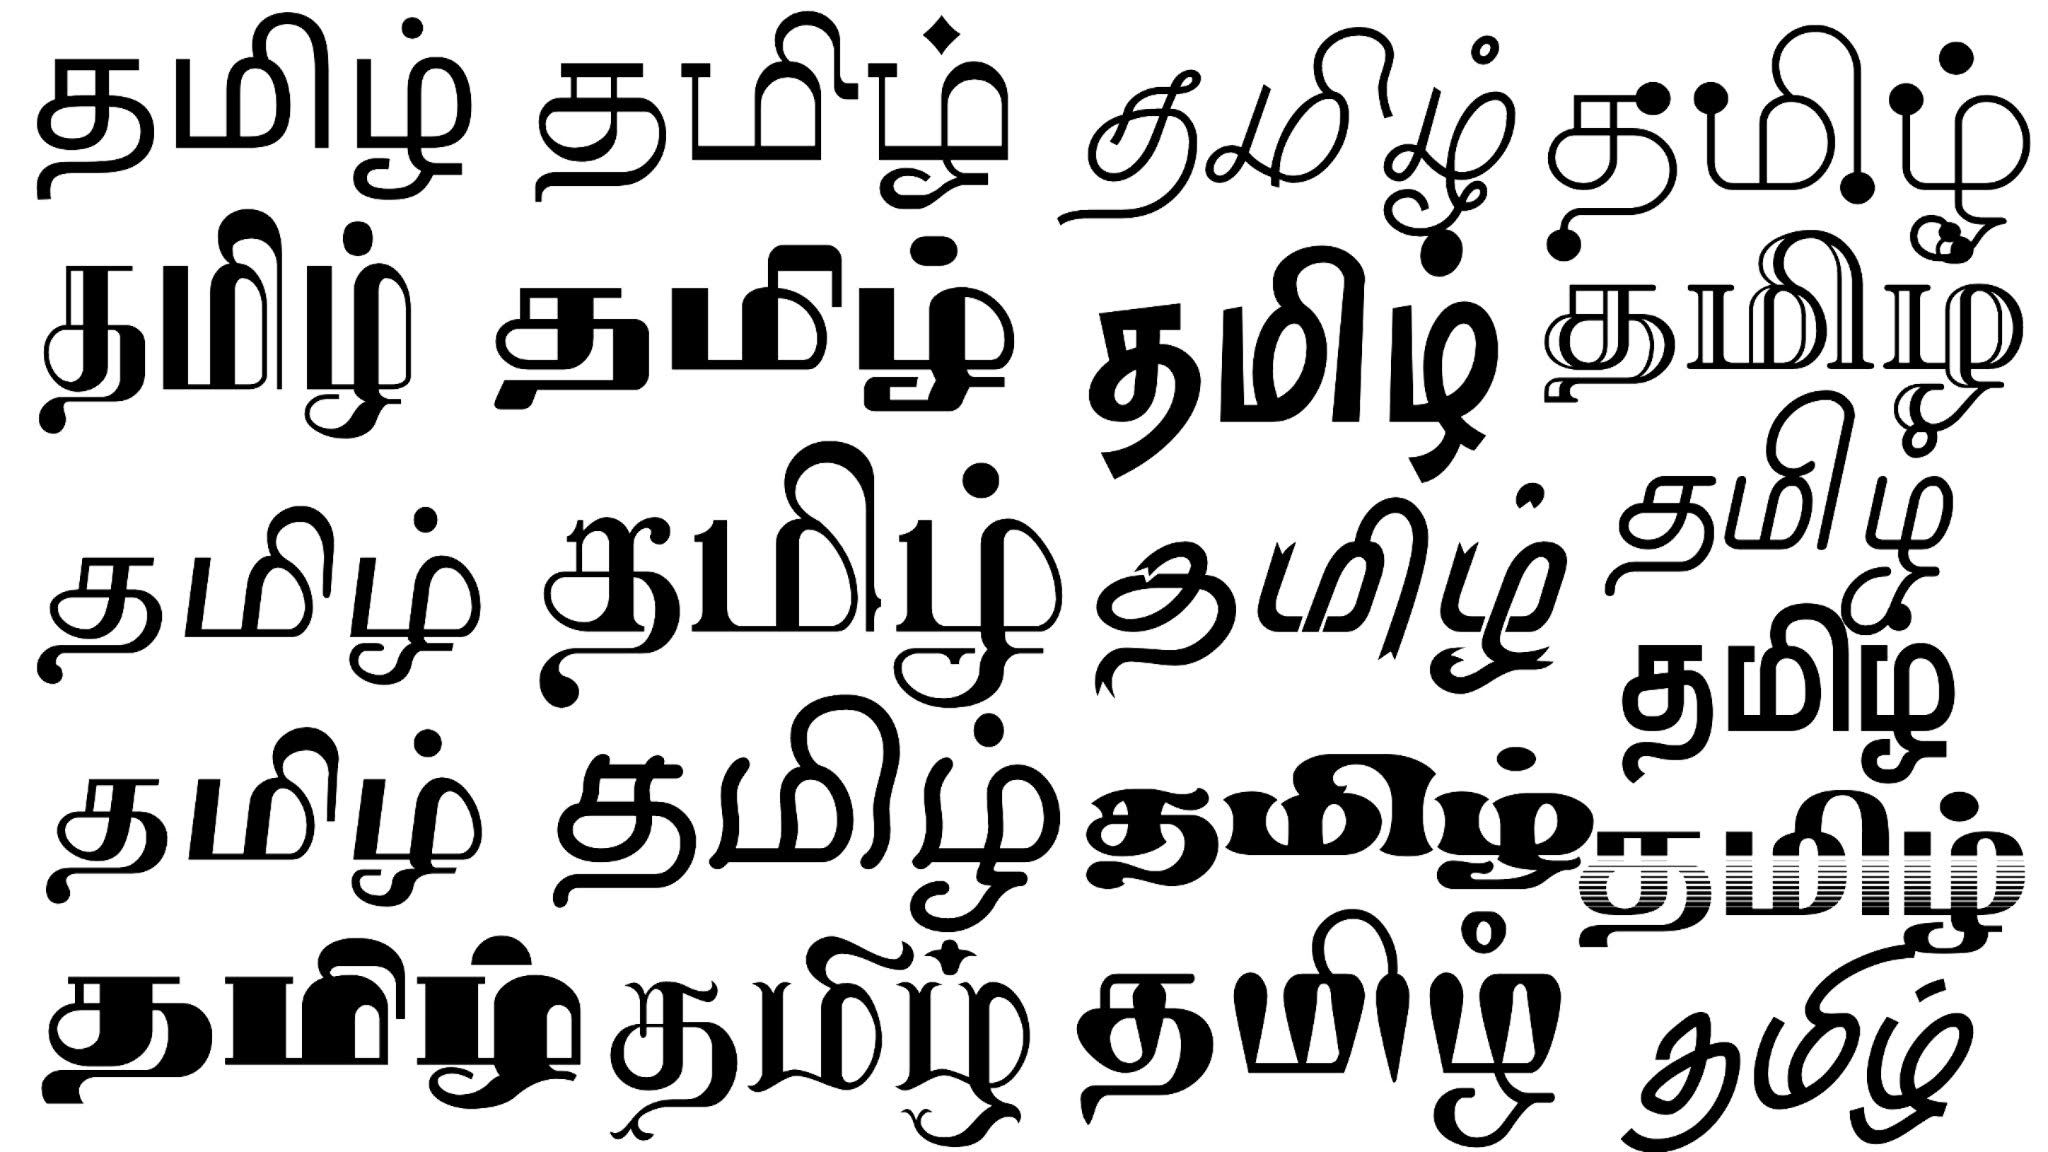 2000-tamil-font-free-download-madras-telegram